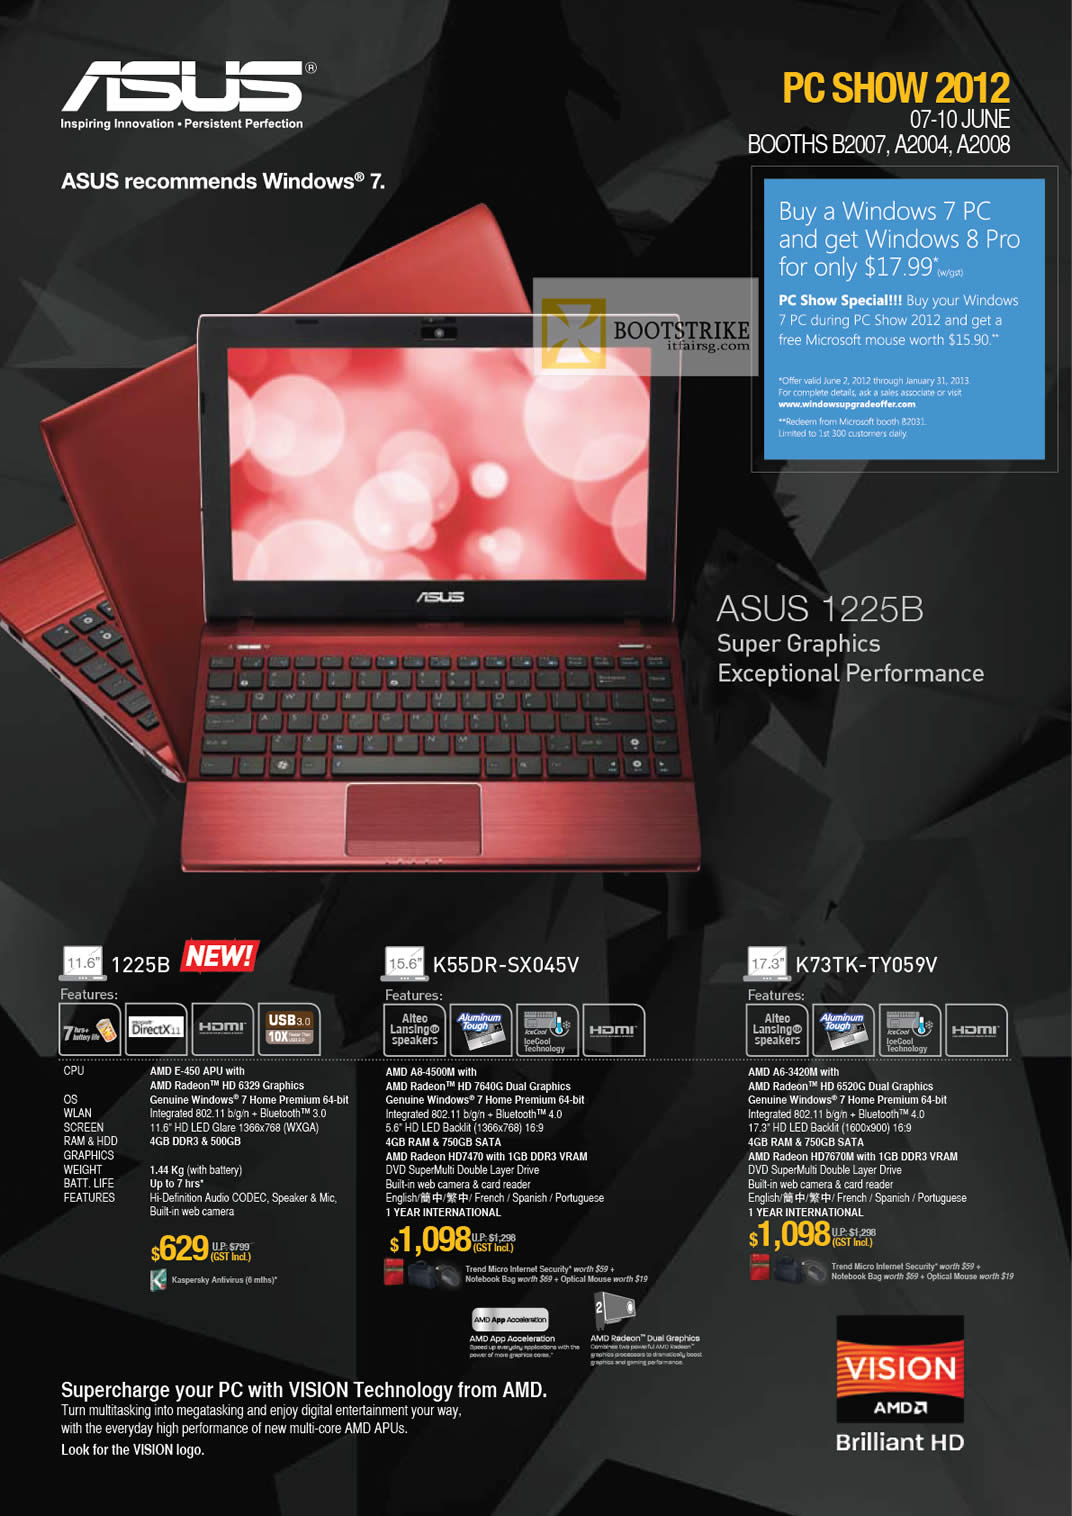 PC SHOW 2012 price list image brochure of ASUS Notebooks 1225B AMD, K55DR-SX045V, K73TK-TY059V